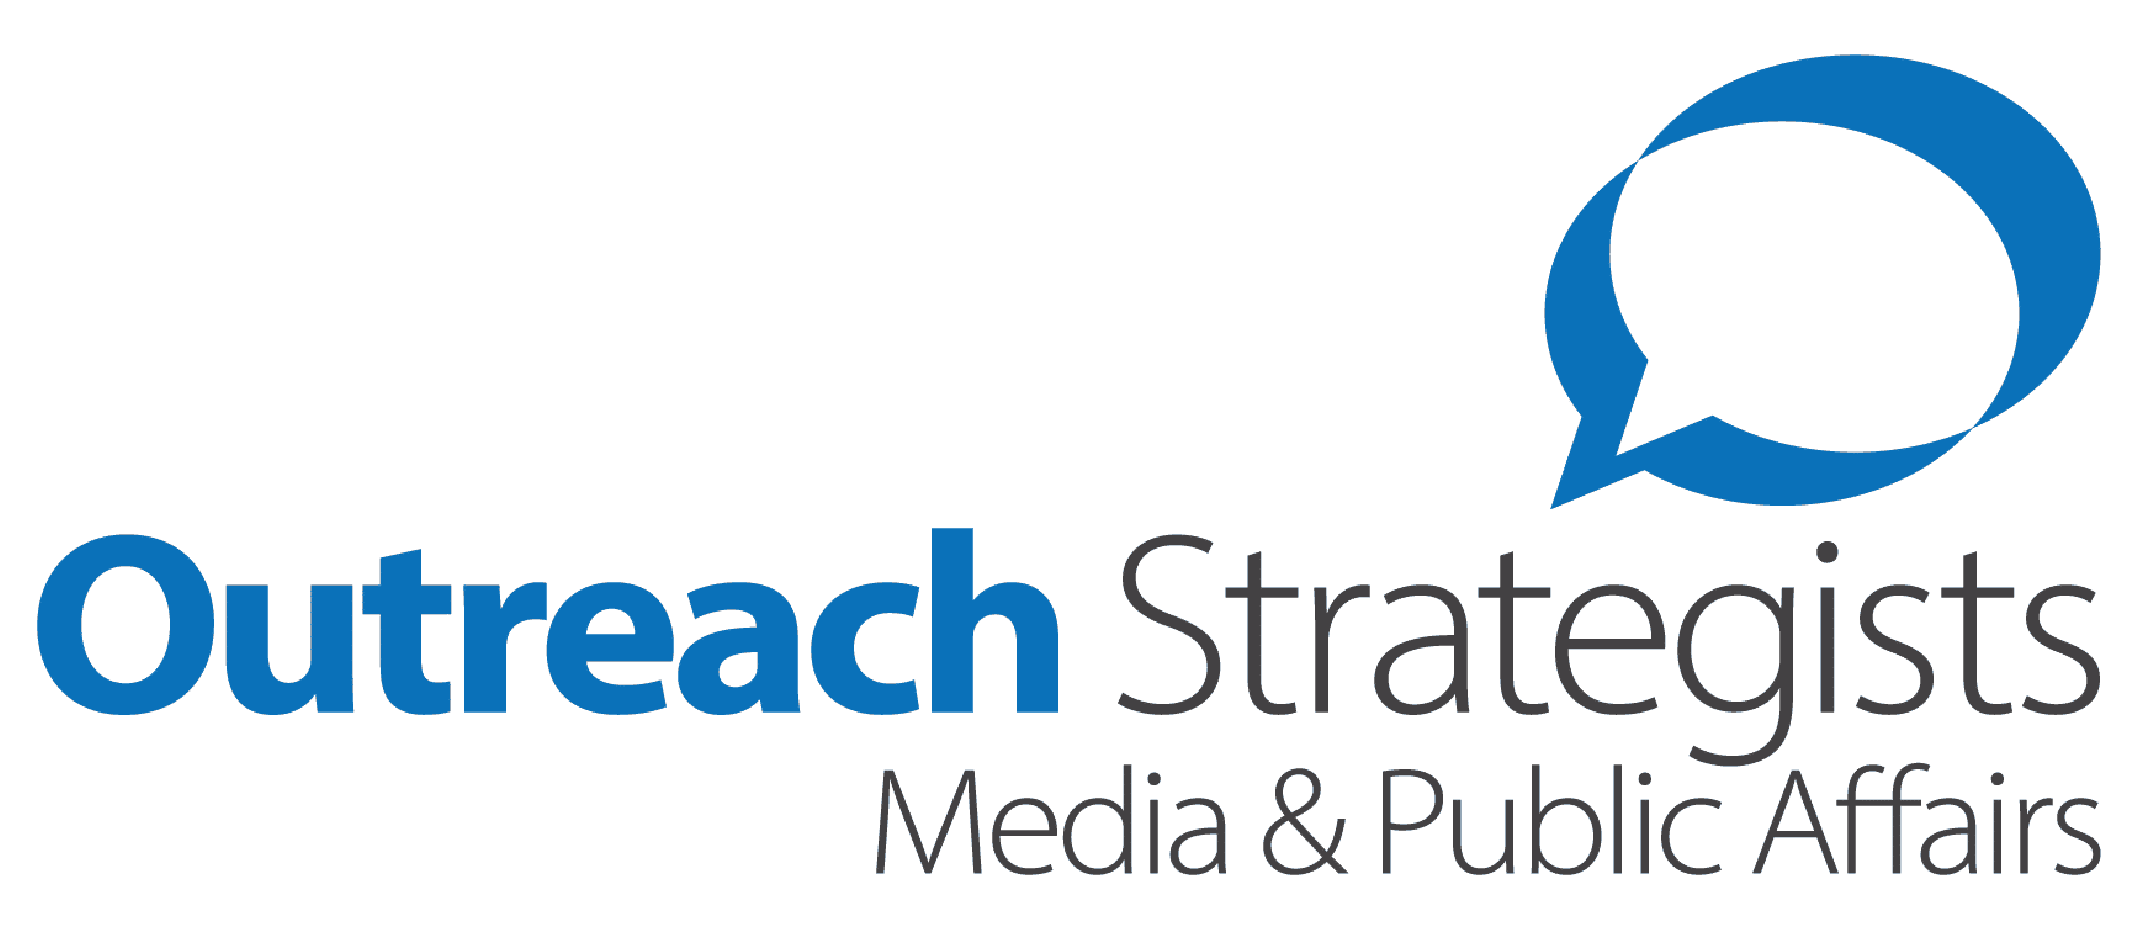 Outreach Strategists Logo